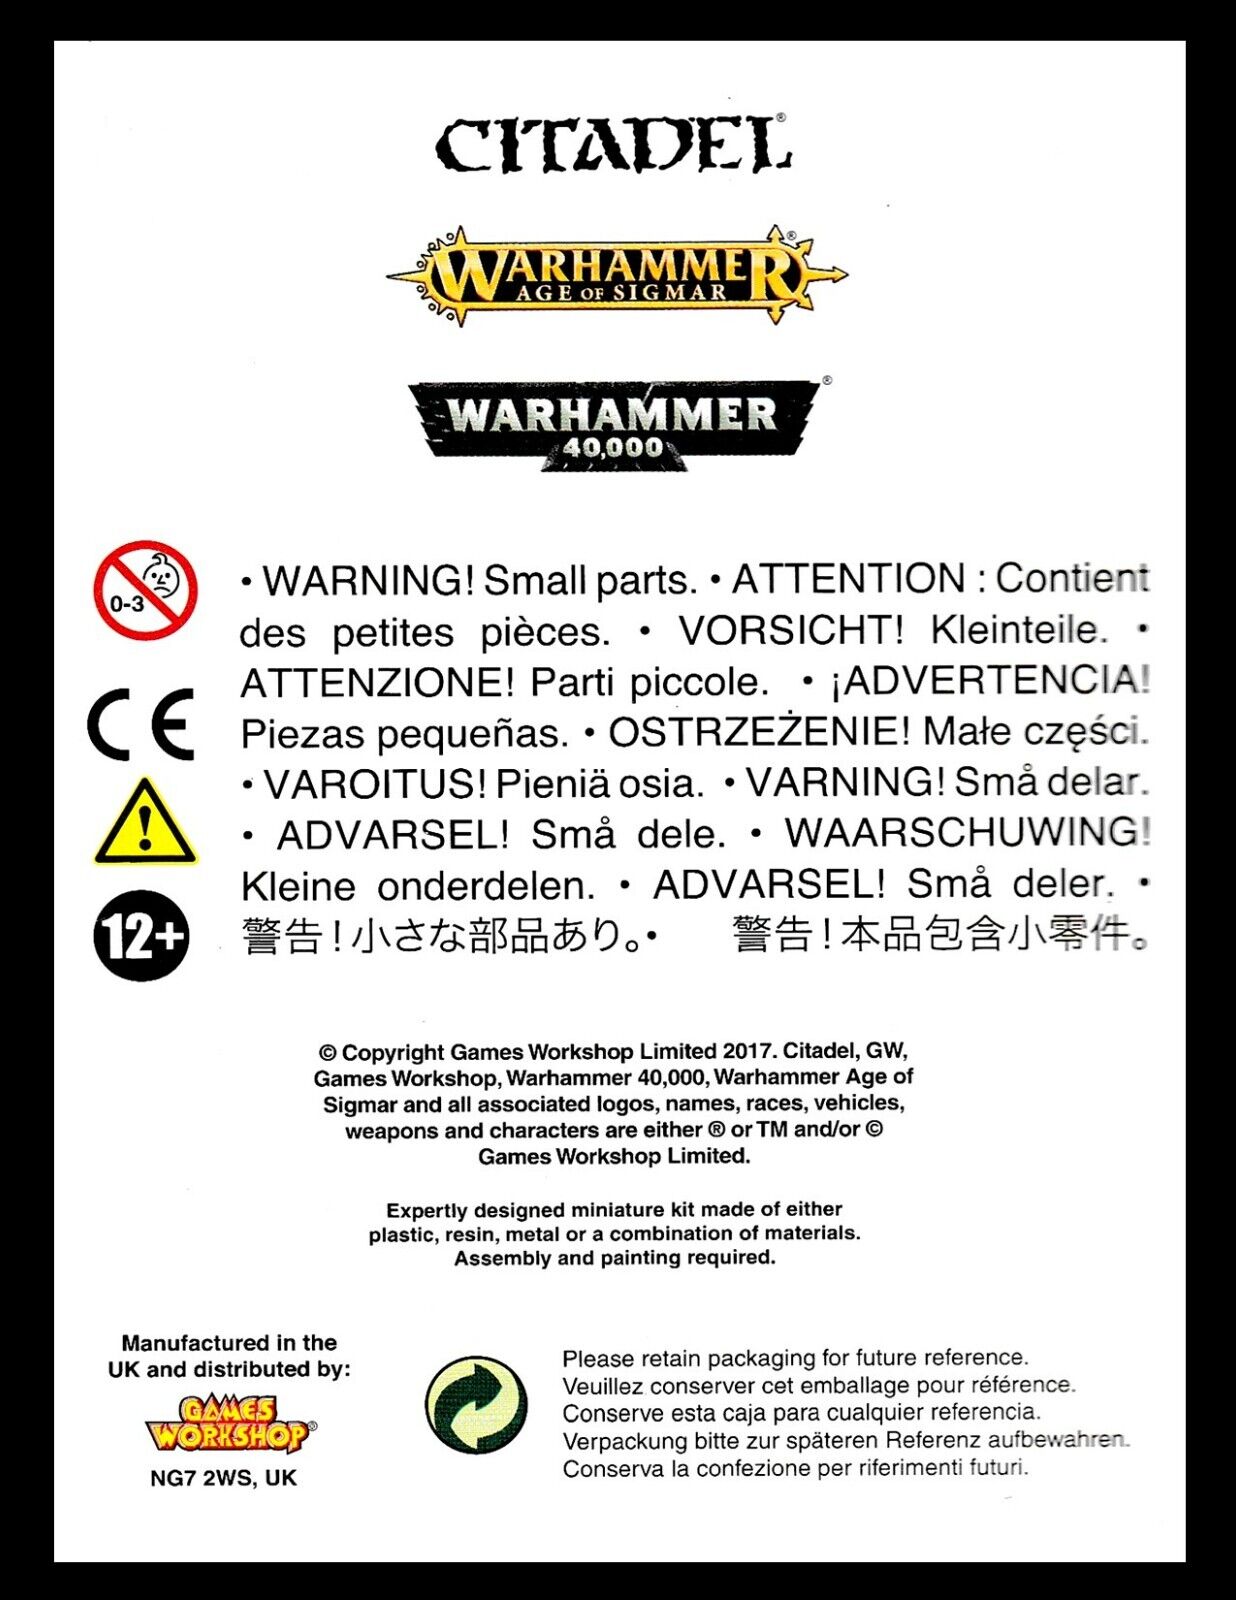 Catachan Jungle Fighters Astra Militarum Warhammer 40K NIB!              WBGames